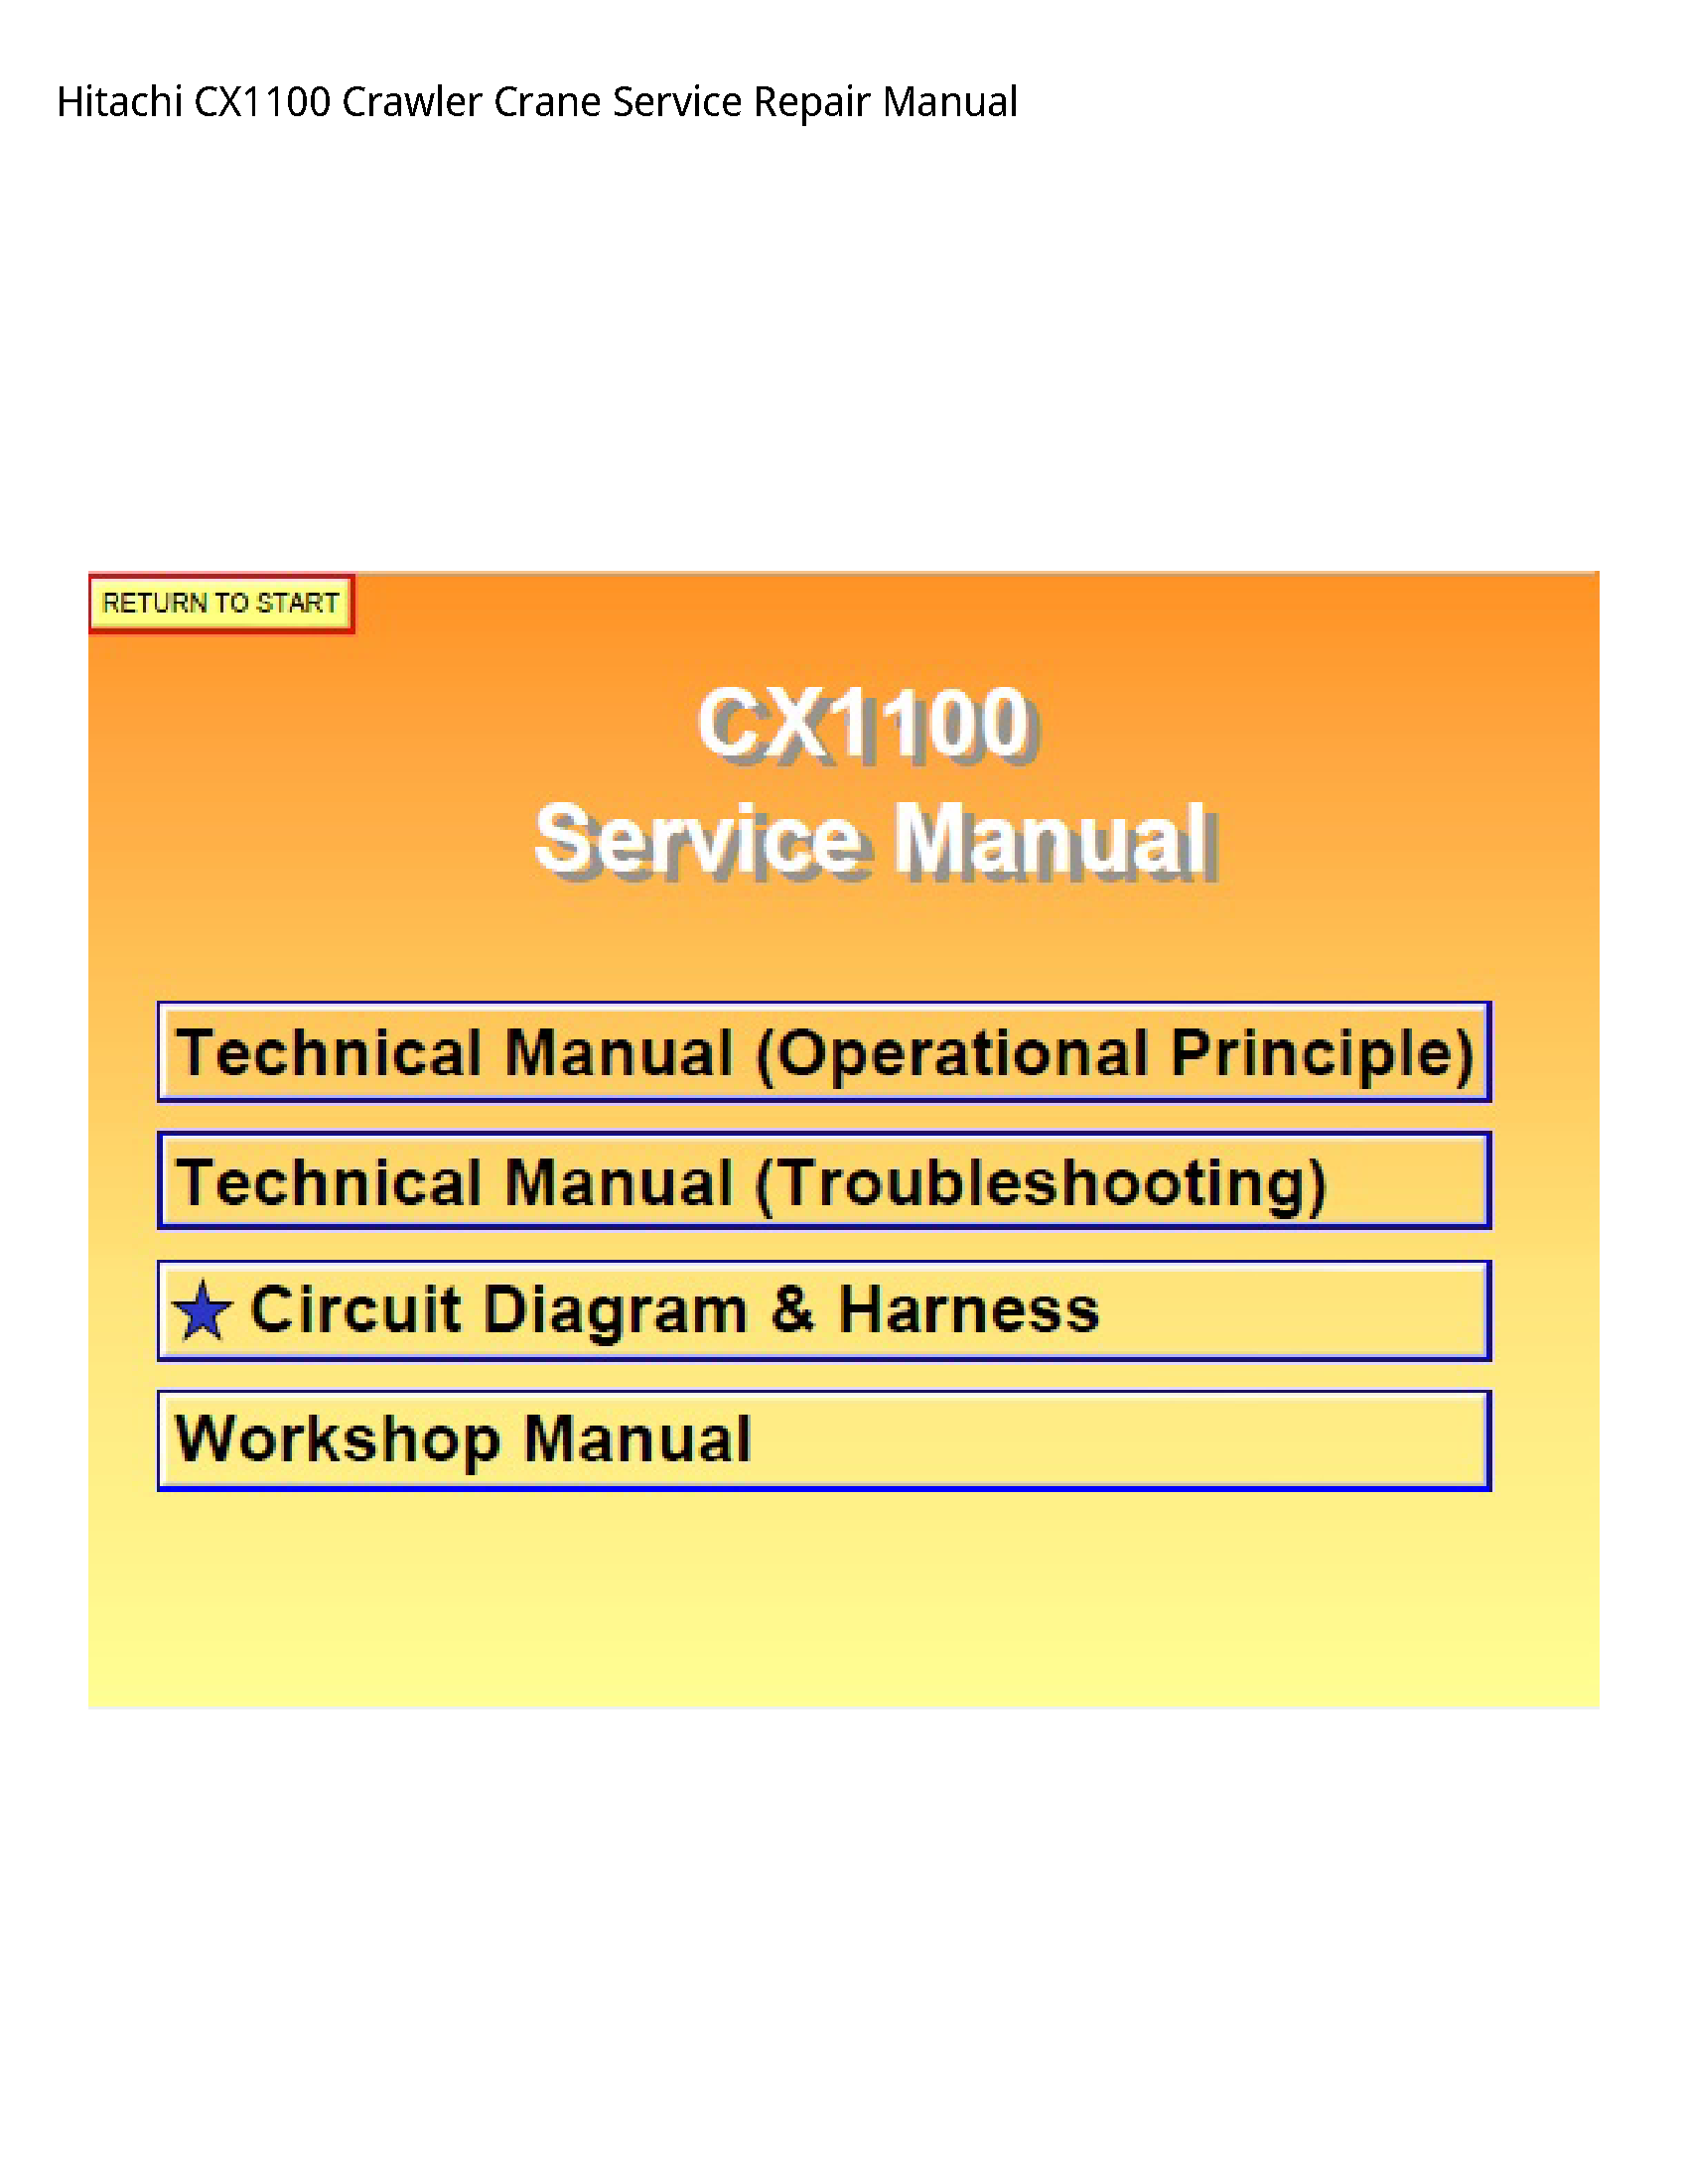 Hitachi CX1100 Crawler Crane manual